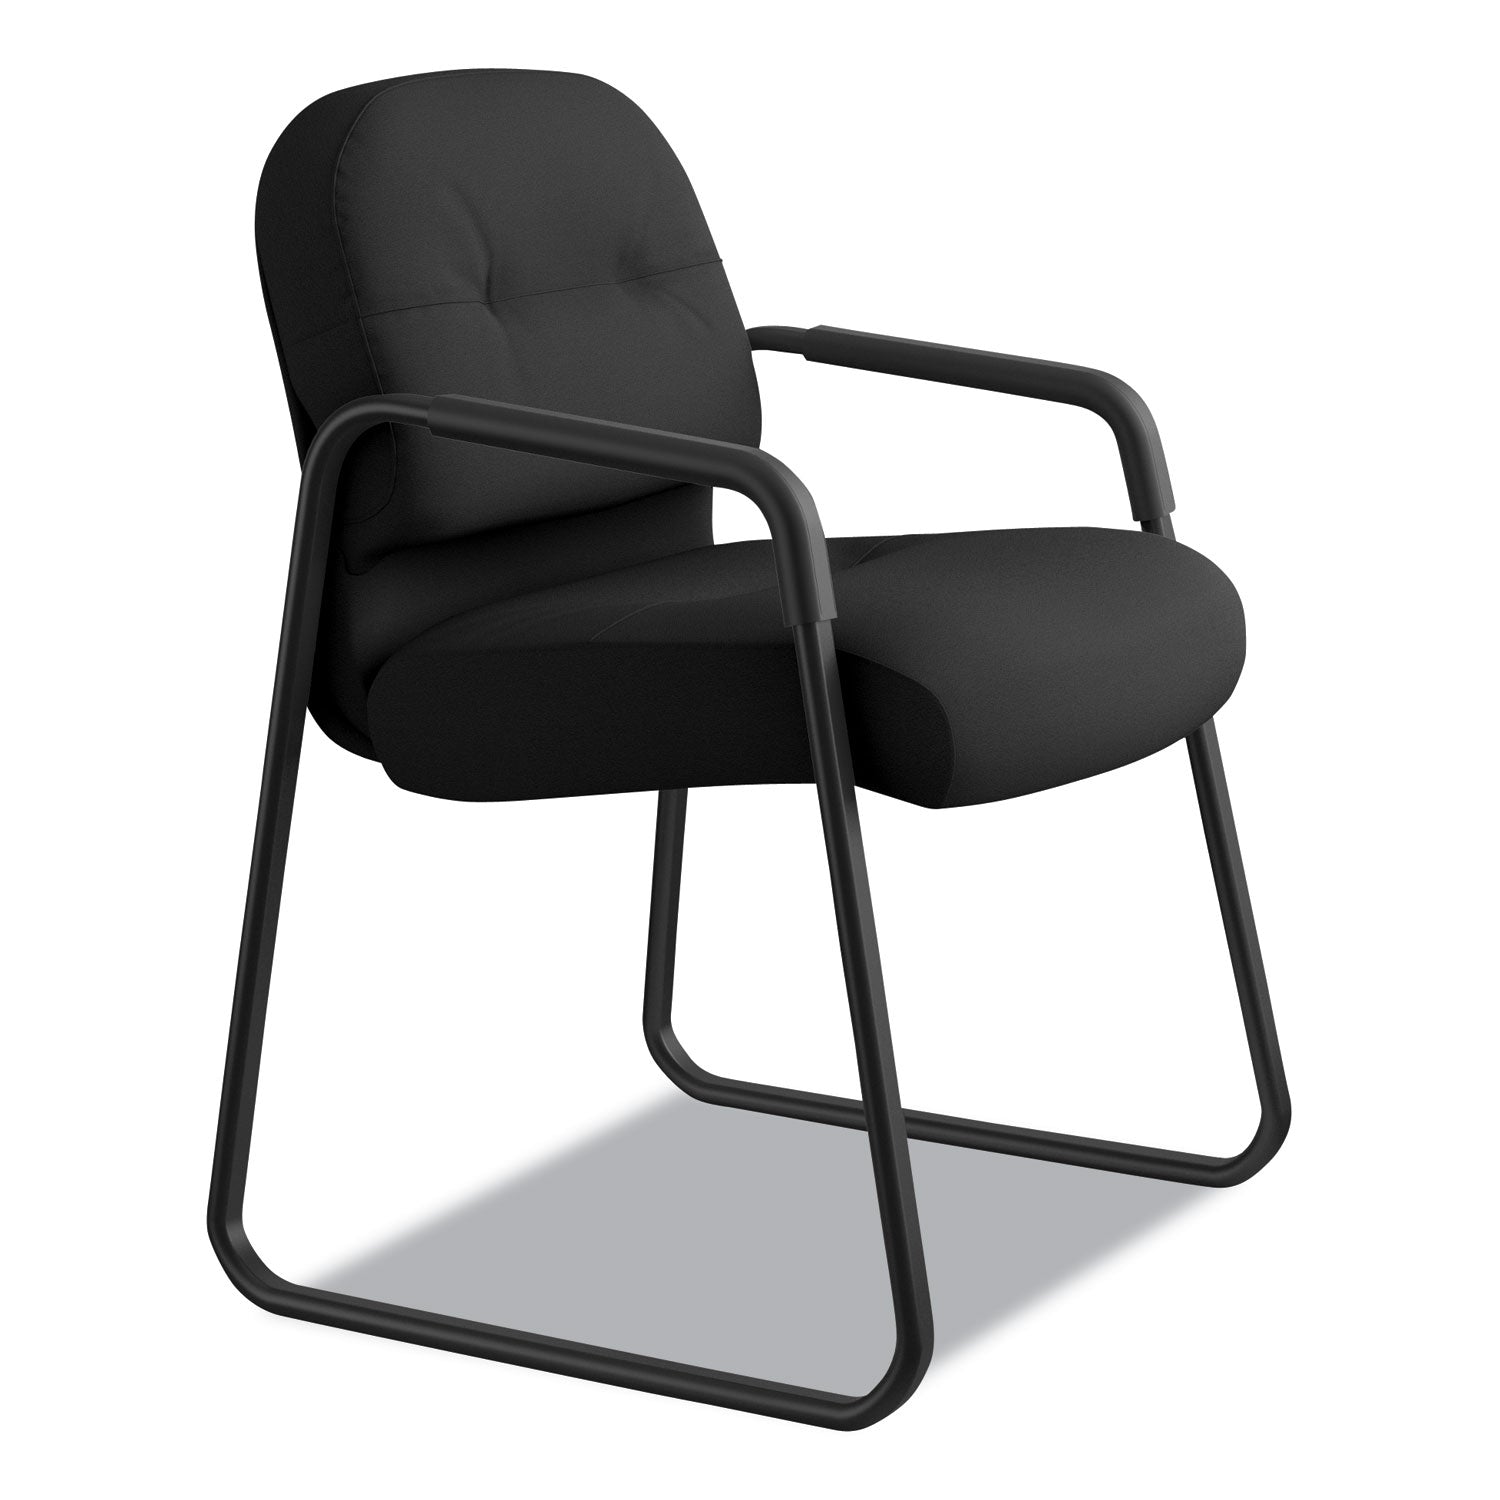 pillow-soft-2090-series-guest-arm-chair-fabric-upholstery-2325-x-28-x-36-black-seat-black-back-black-base_hon2093cu10t - 2